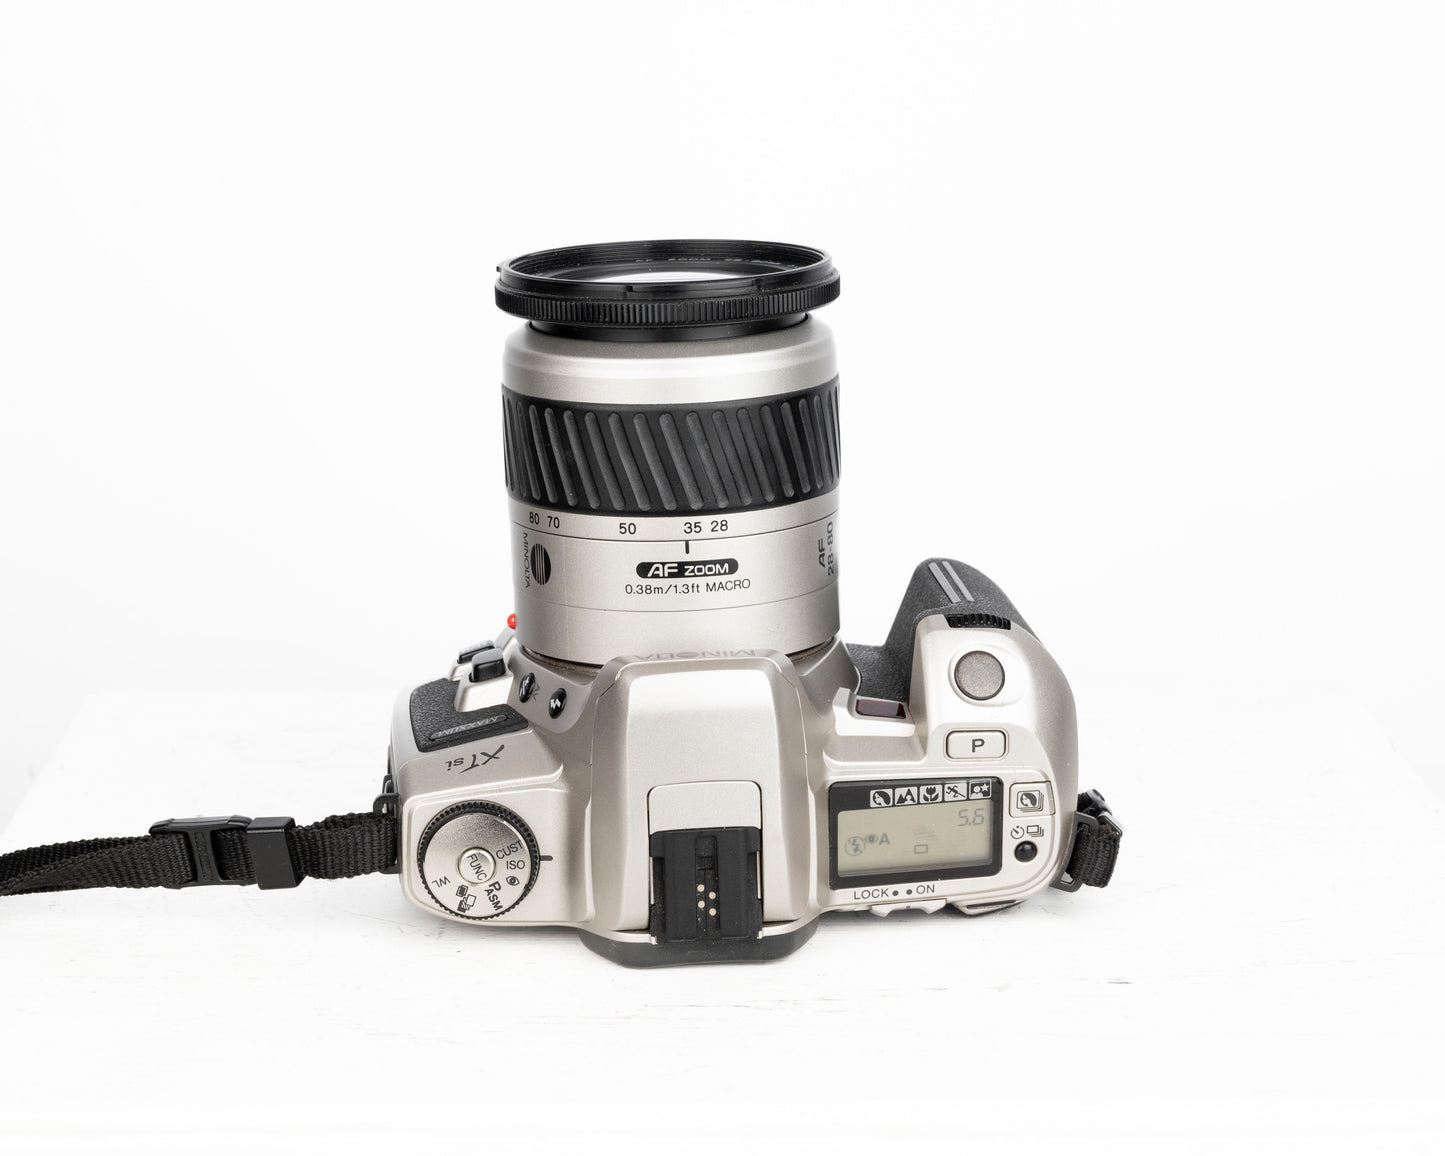 Minolta Maxxum XTsi reflex à film 35 mm avec objectif 28-80 mm + sac pour appareil photo Minolta + télécommande (série 94009570)